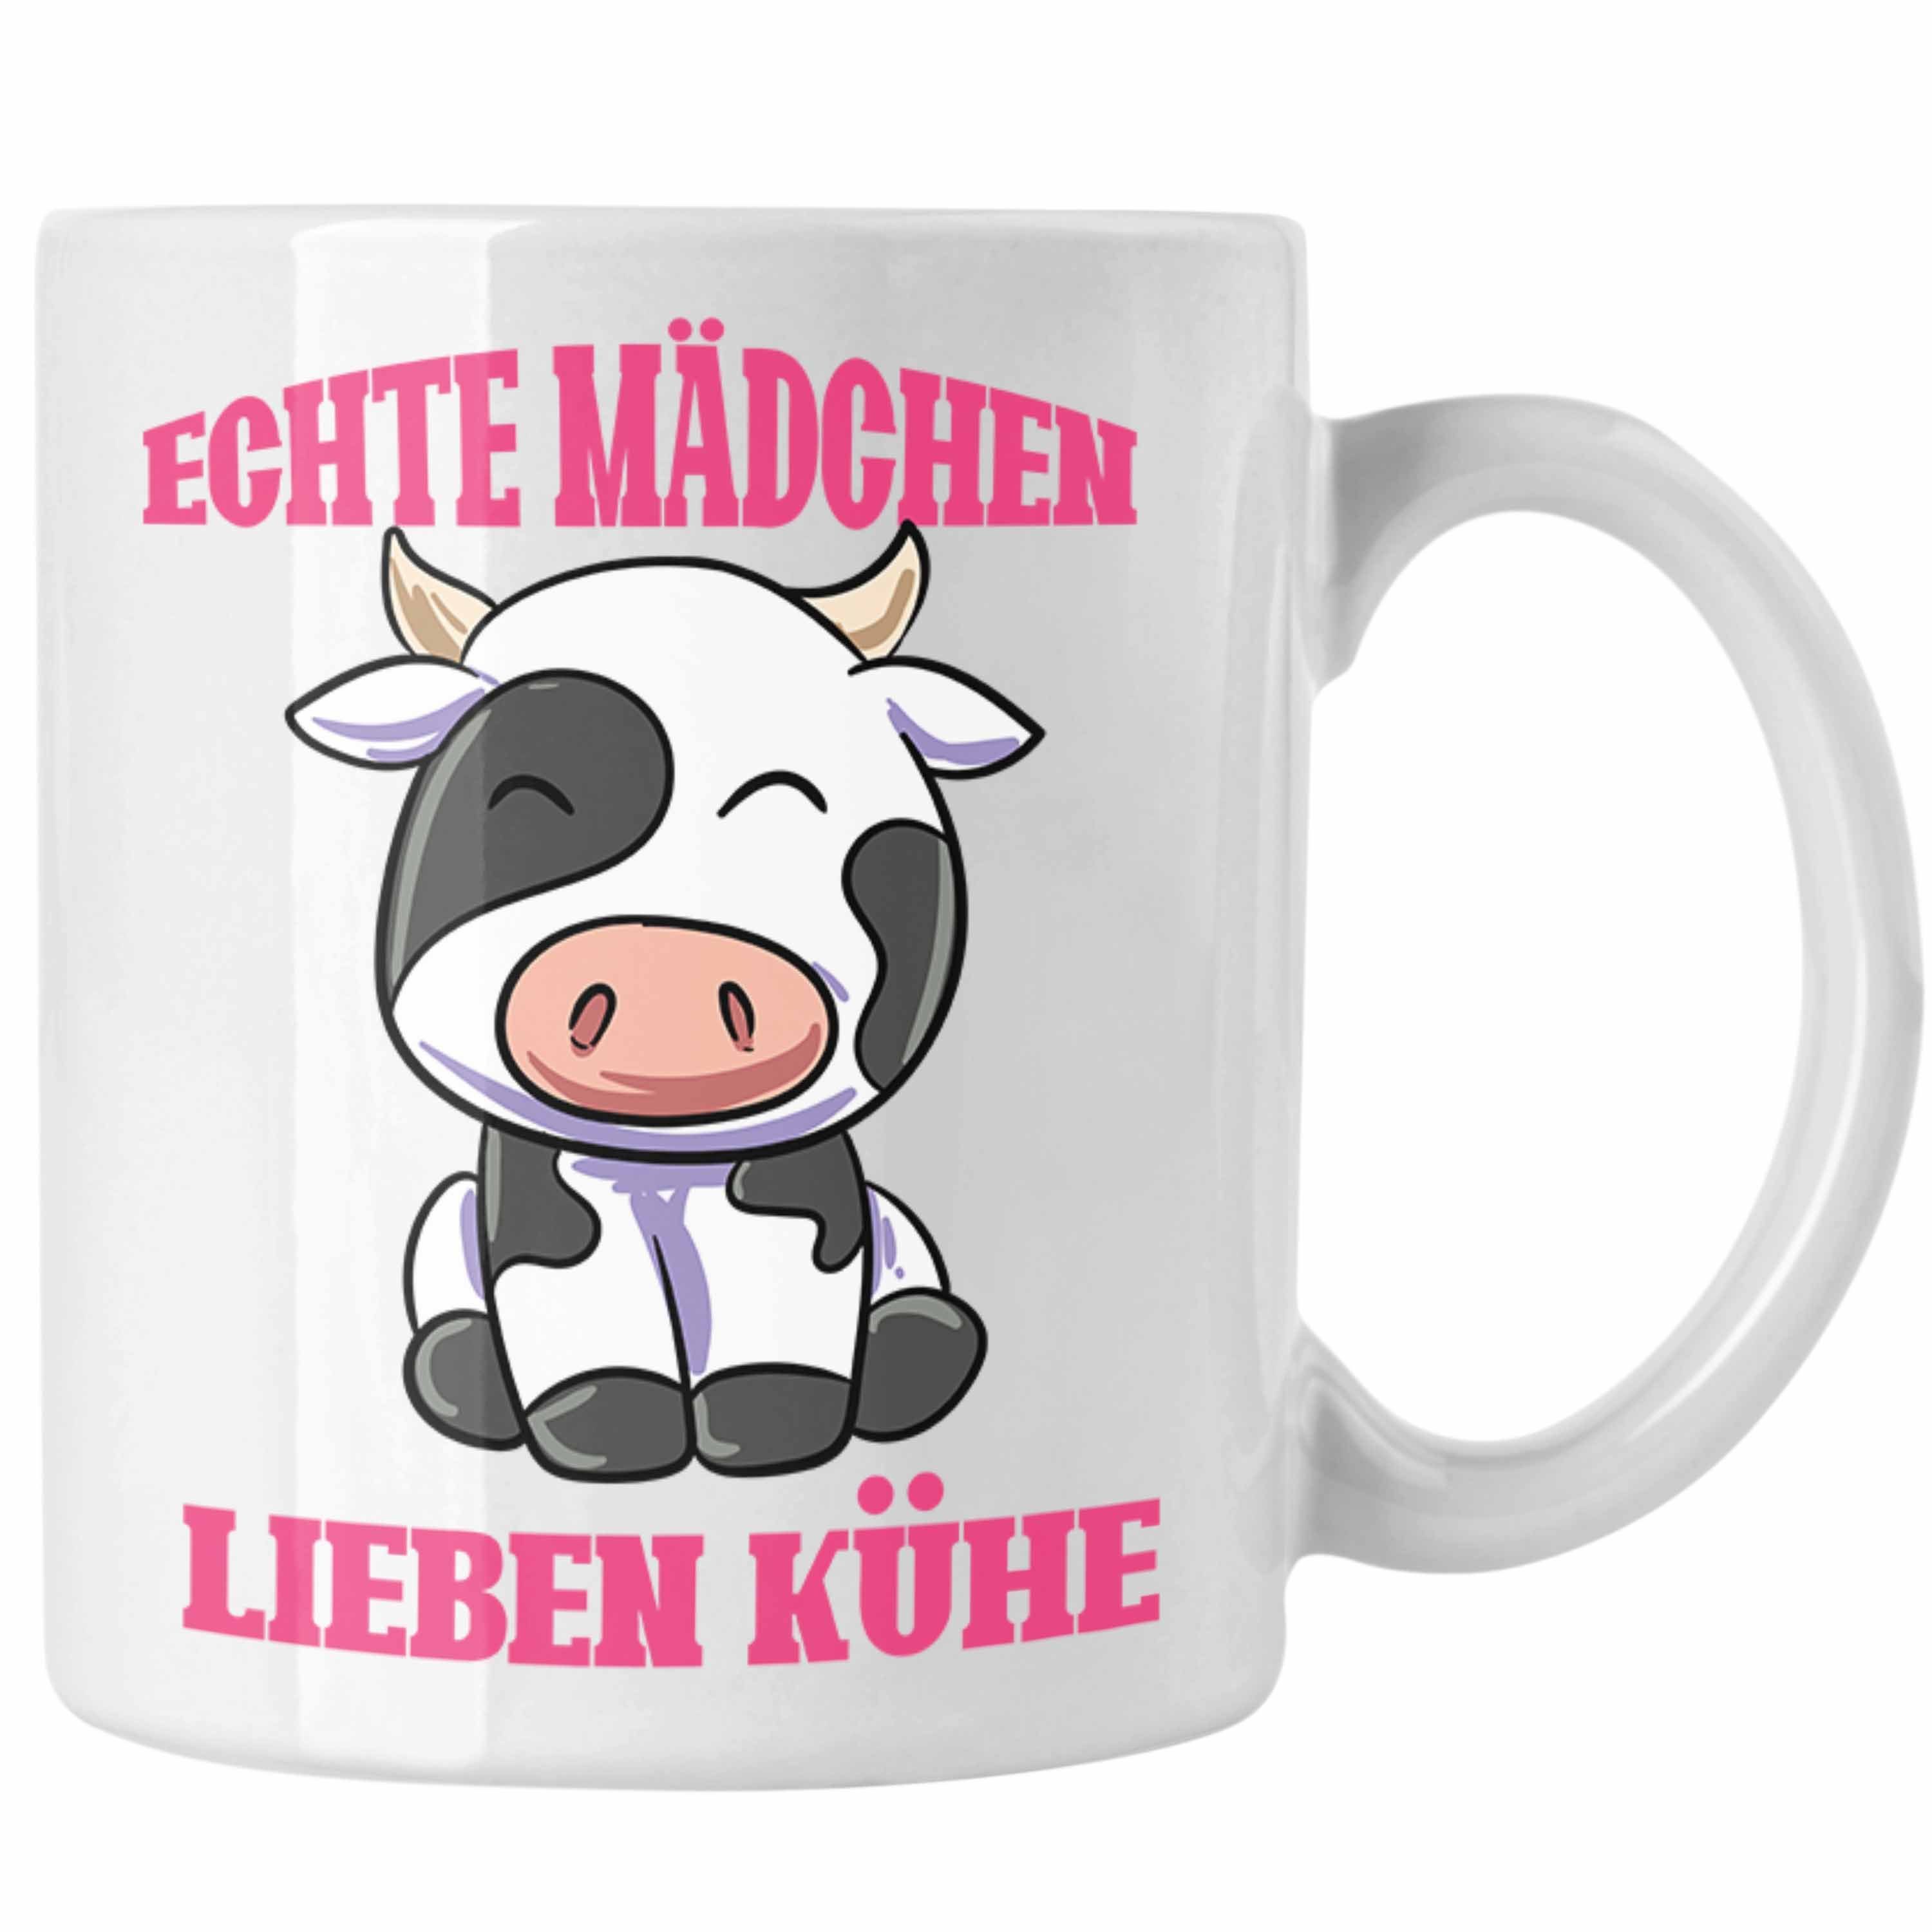 Trendation Tasse Kuh Tasse Geschenk Echte Mädchen Lieben Kühe Landwirtin Bäuerin Gesch Weiss